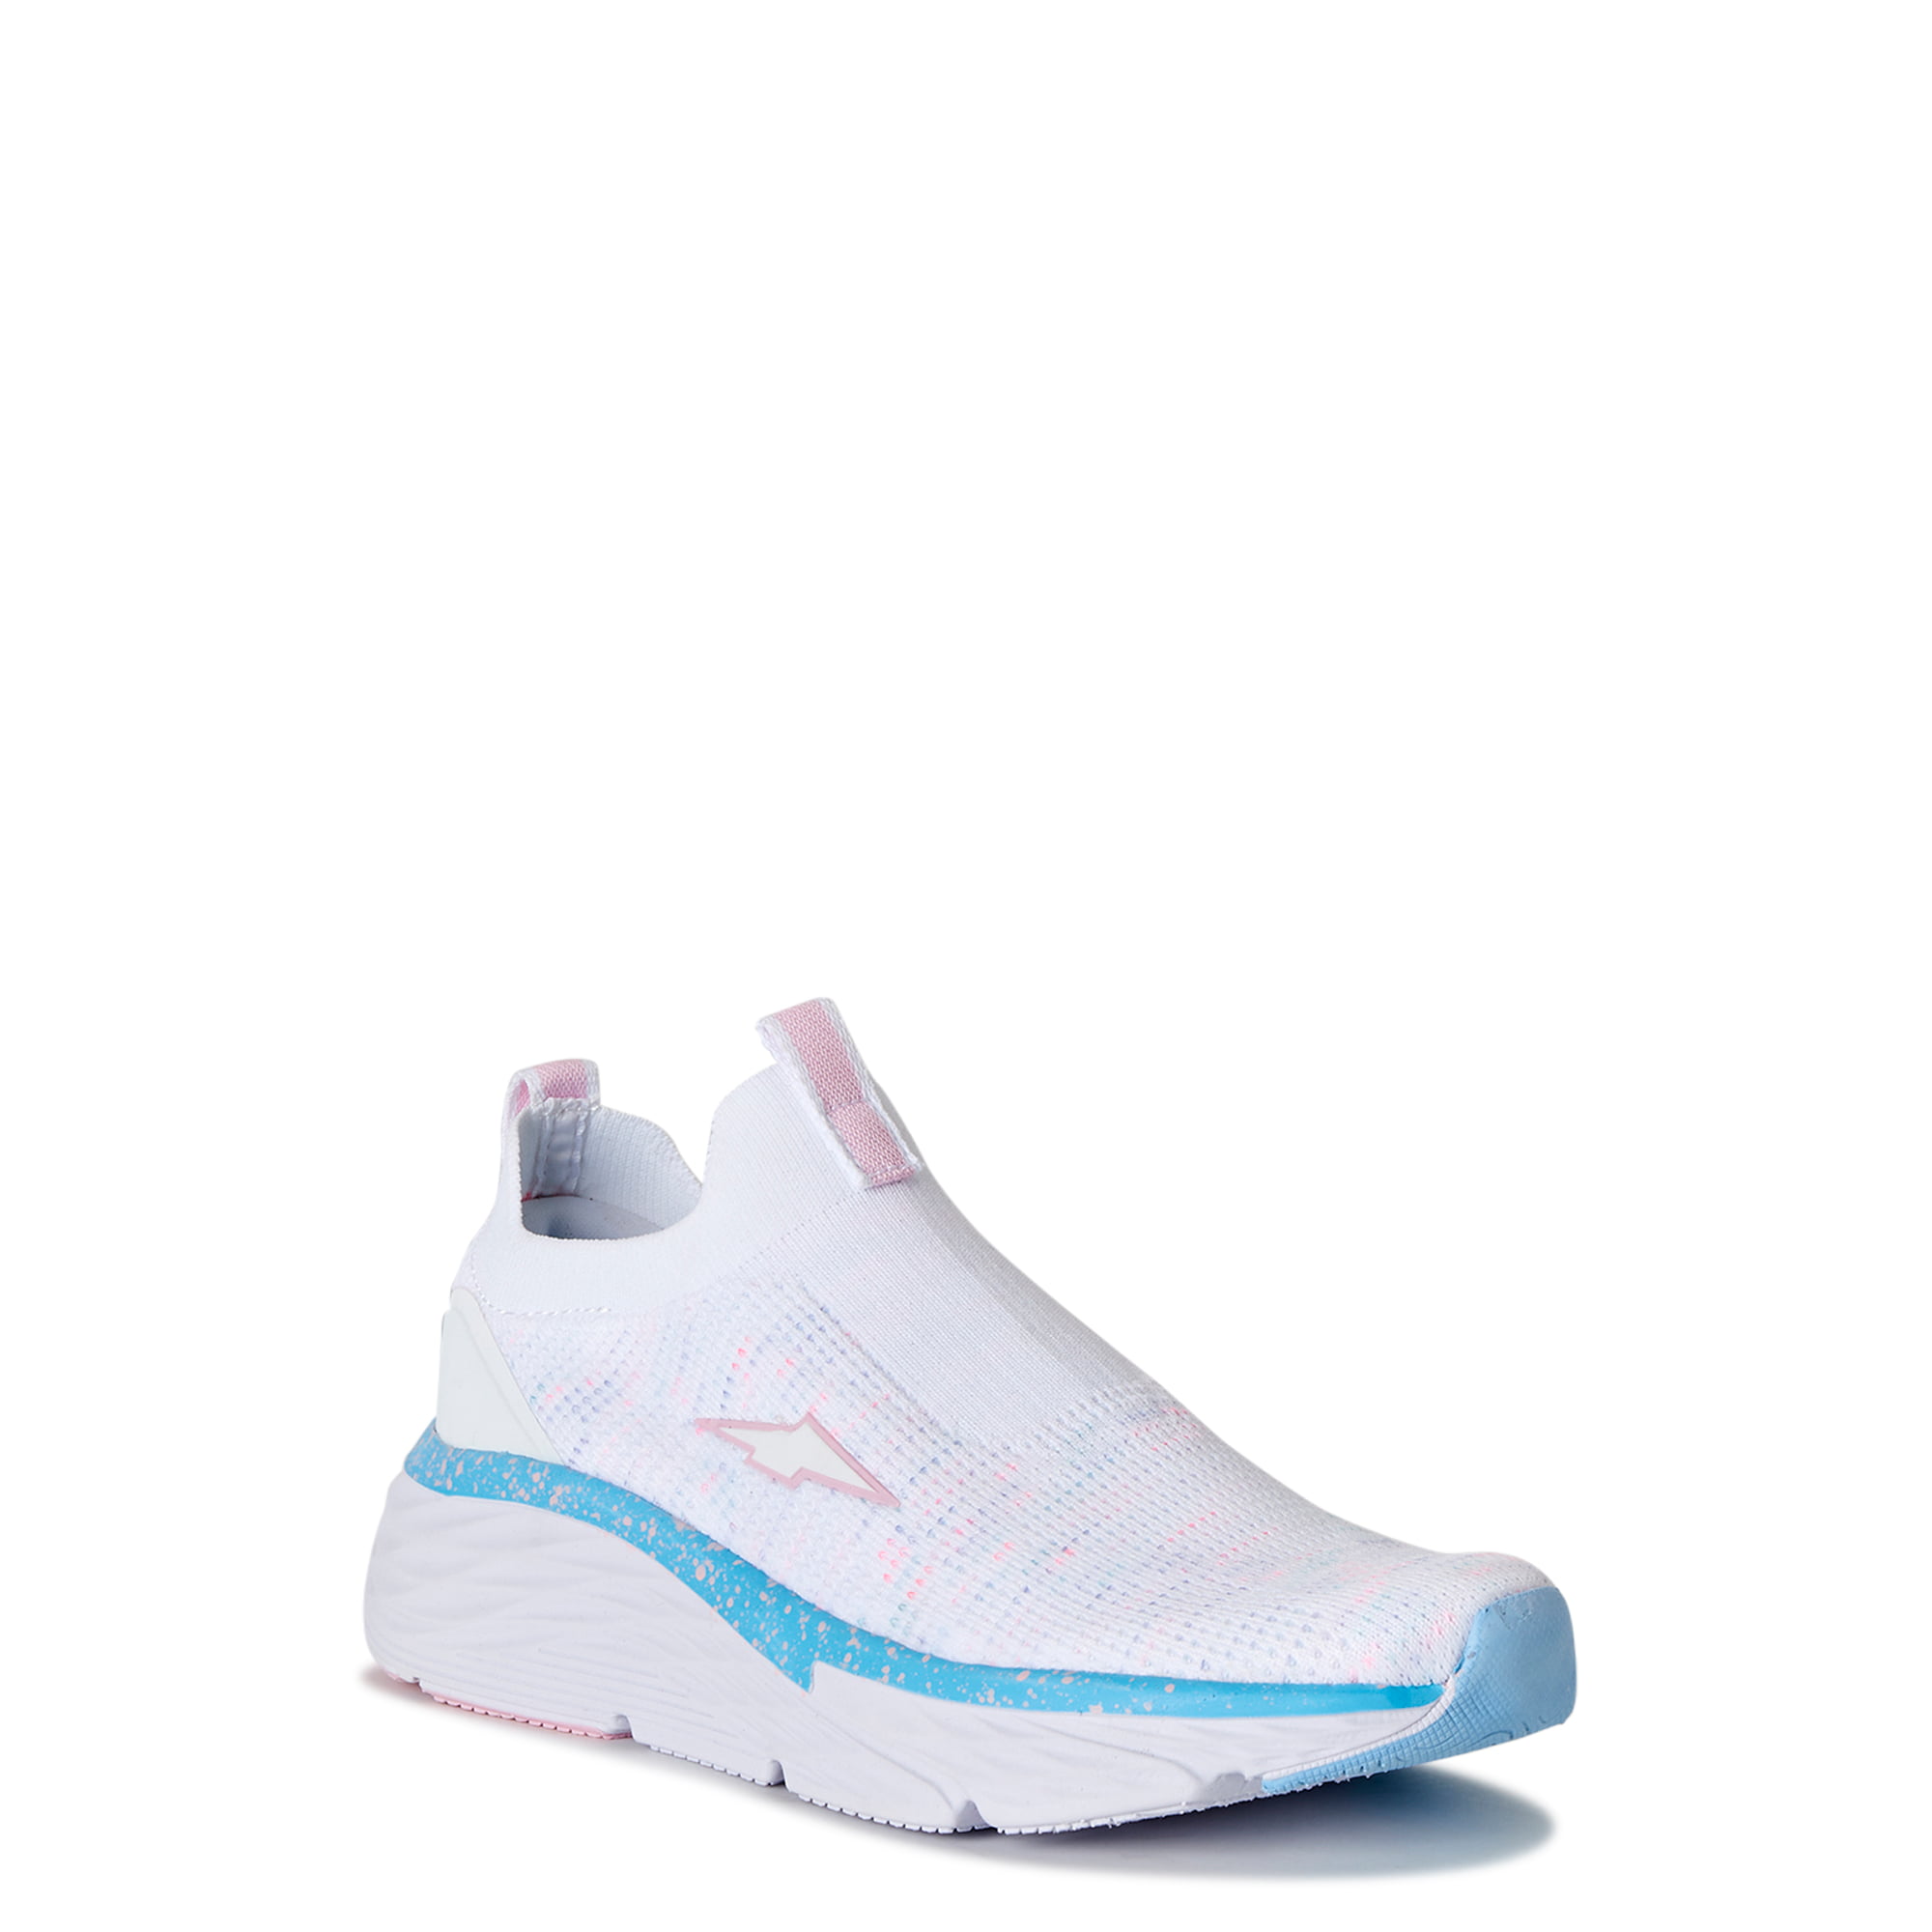 Avia Women's Slip On Athletic Sneakers (White/Blue) $10 + Free Shipping w/ Walmart+ or on $35+